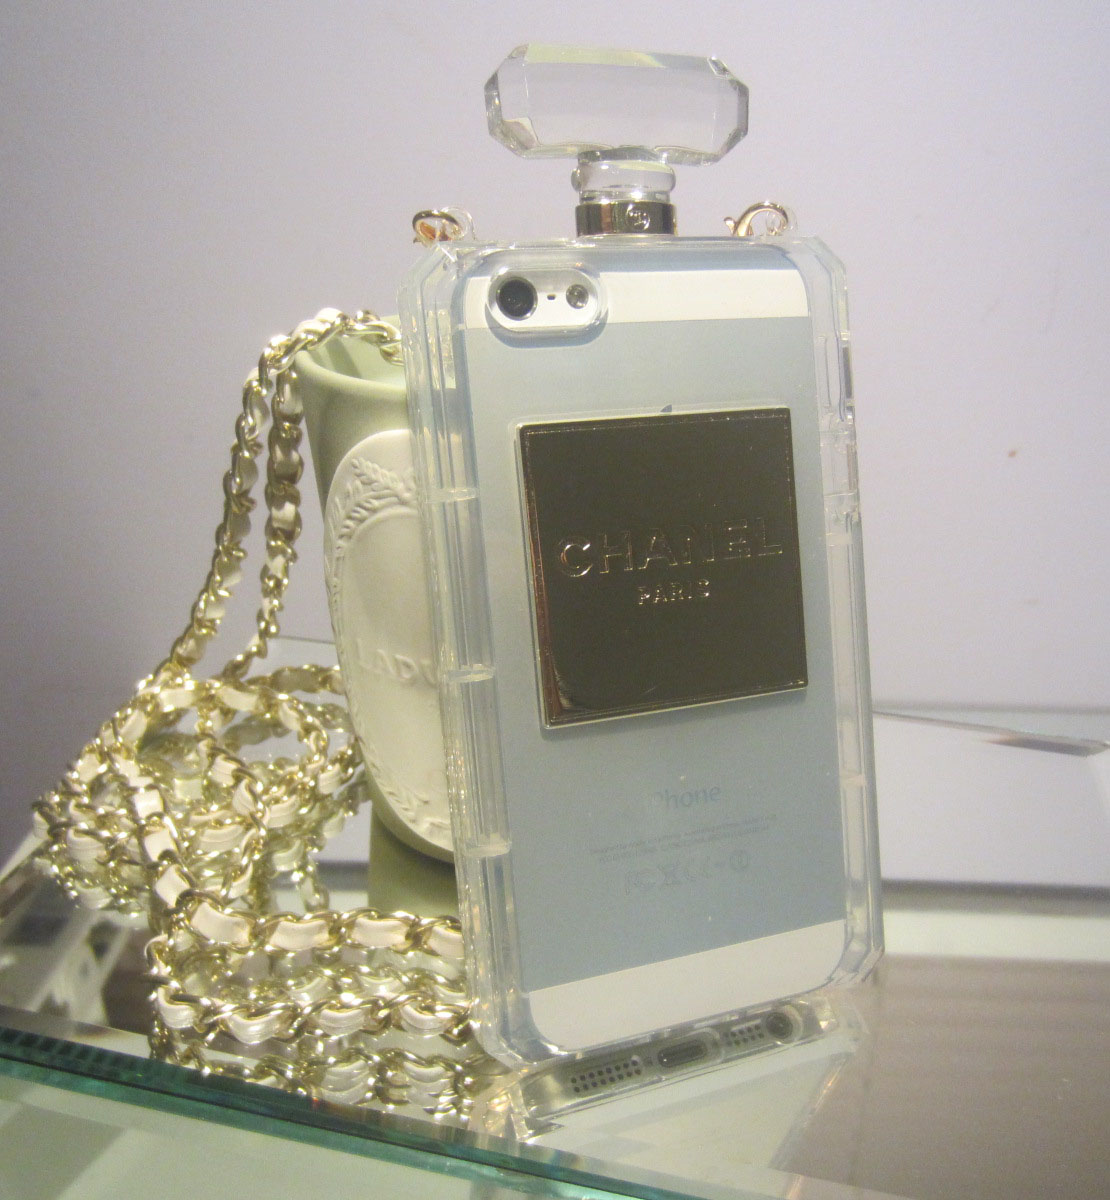 Chanel Inspired Iphone Cases Ohhtamara